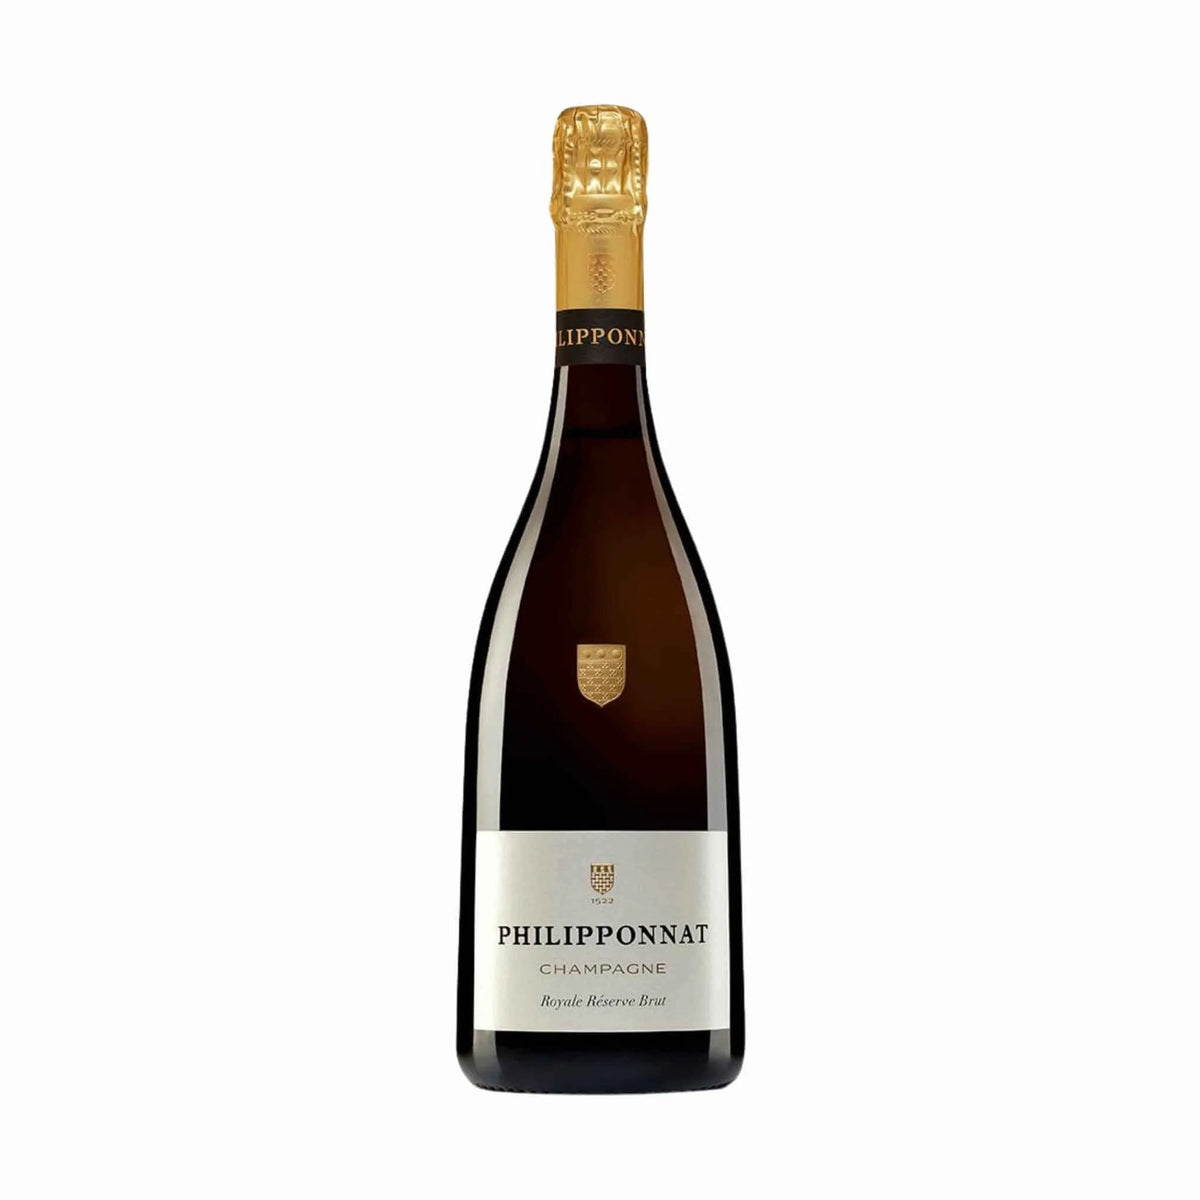 Philipponnat-Champagner-Pinot Noir, Chardonnay, Pinot Meunier-Royale Reserve Brut-WINECOM